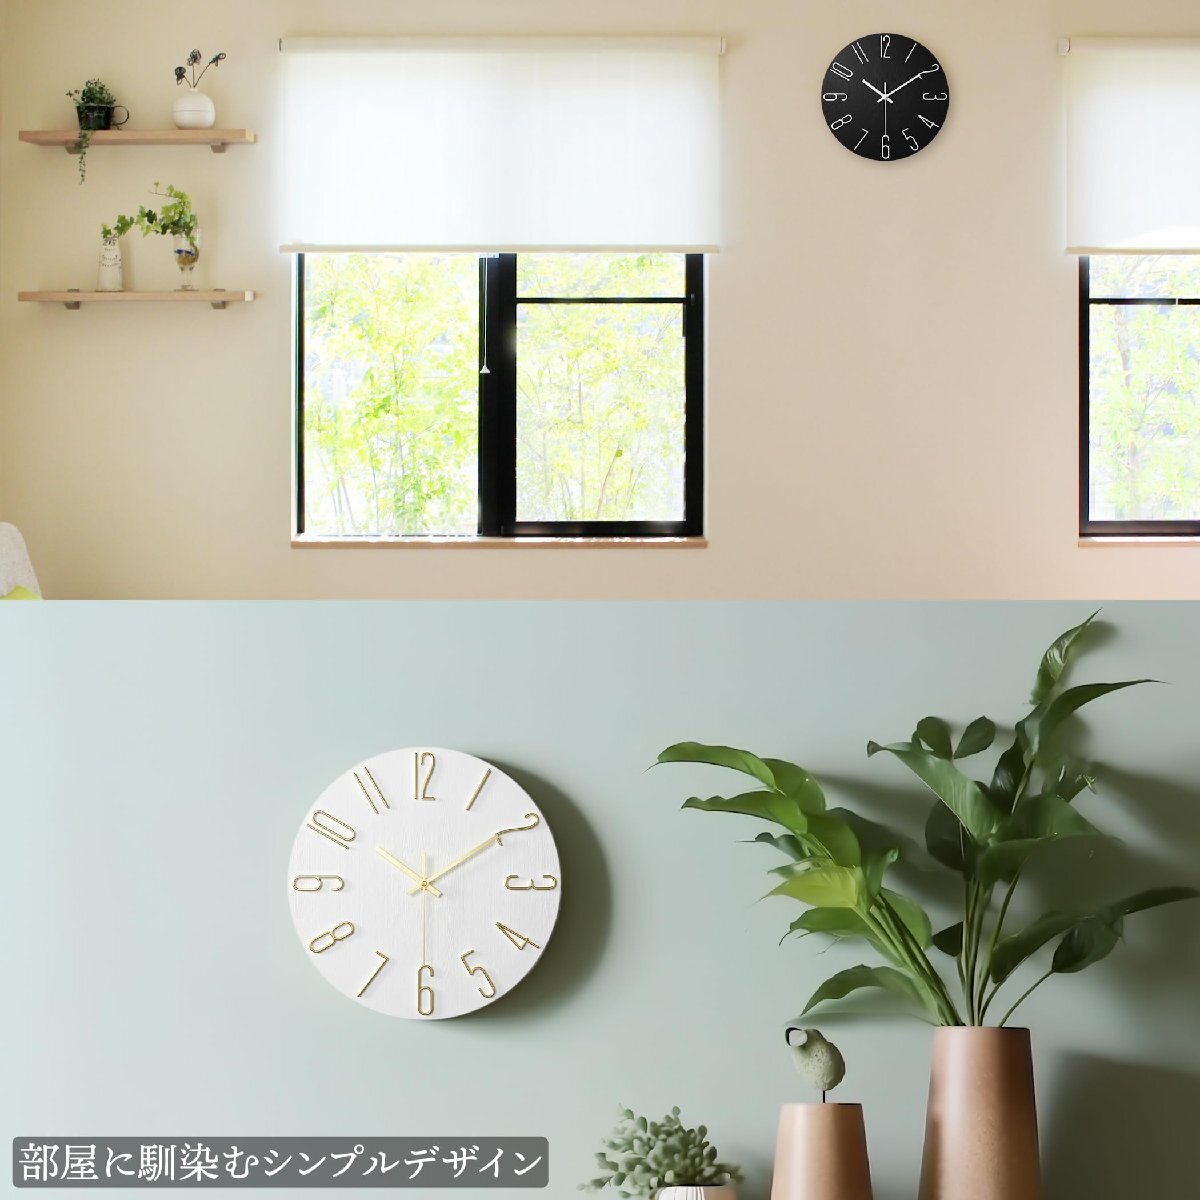 Lezalic 壁掛け 時計 シンプル 北欧風 インテリア アナログ ウォール時計 静音 リビング オフィス 寝室 (ホワイトベージュ)_画像5